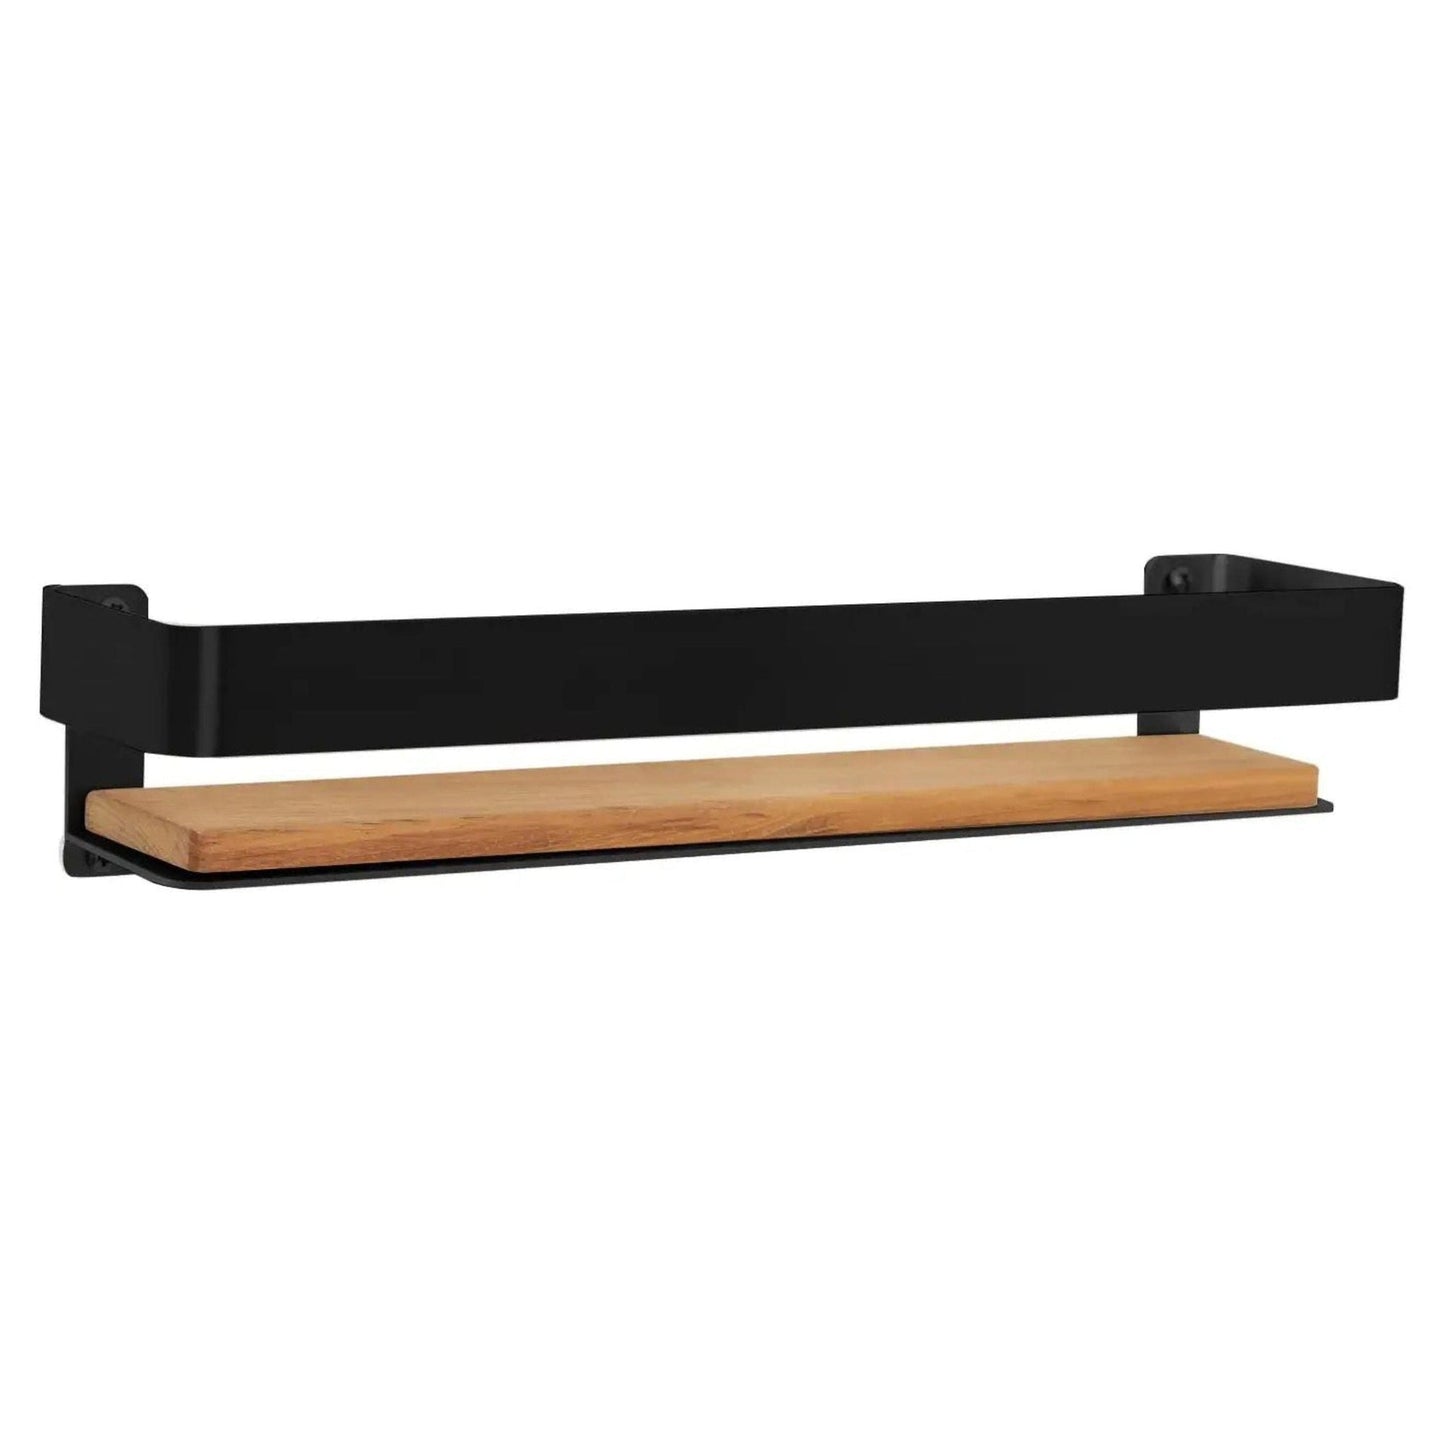 Seachrome Coronado 700 Series 18" x 4" Rectangular Shower Shelf With Rail in Matte Black Powder Coated Stainless Steel and Natural Teak Wood Insert